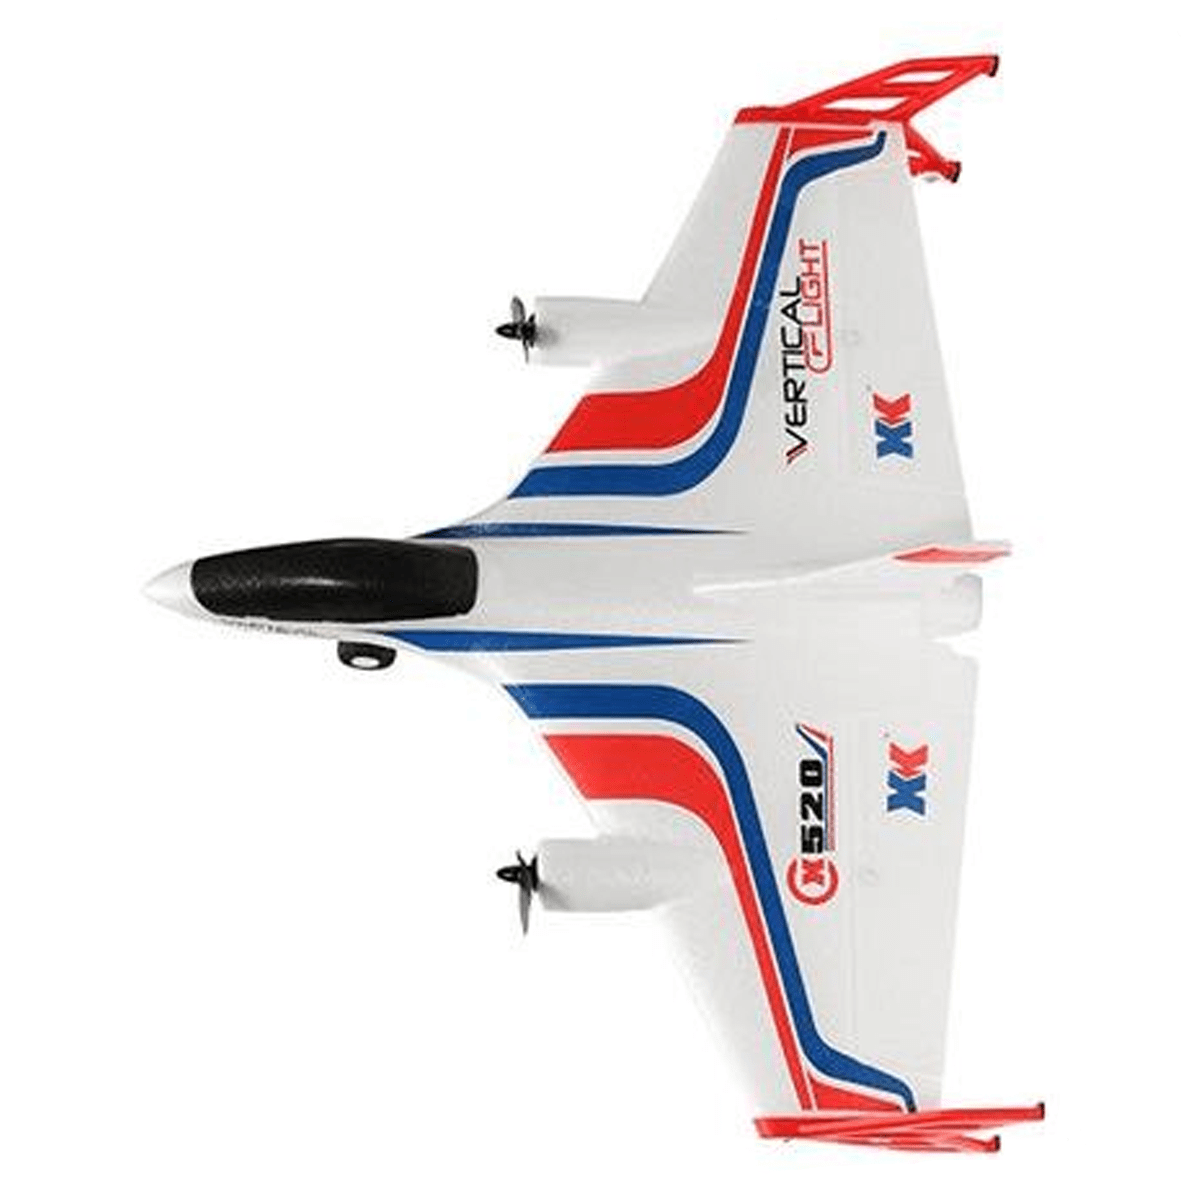 My Toys X520 Airplane